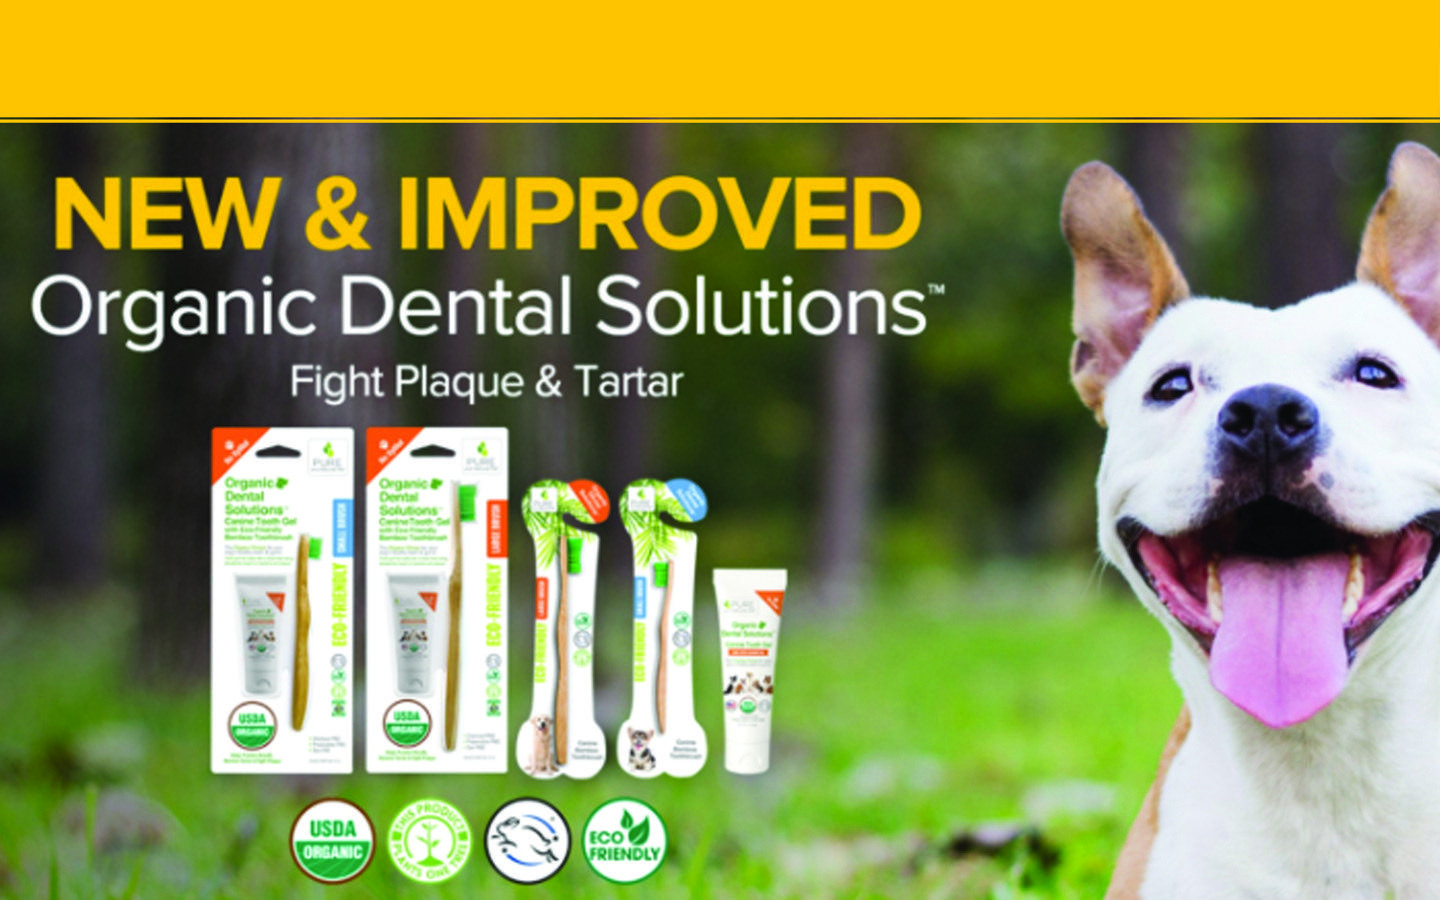 Pure & Natural Pet Dental Kit